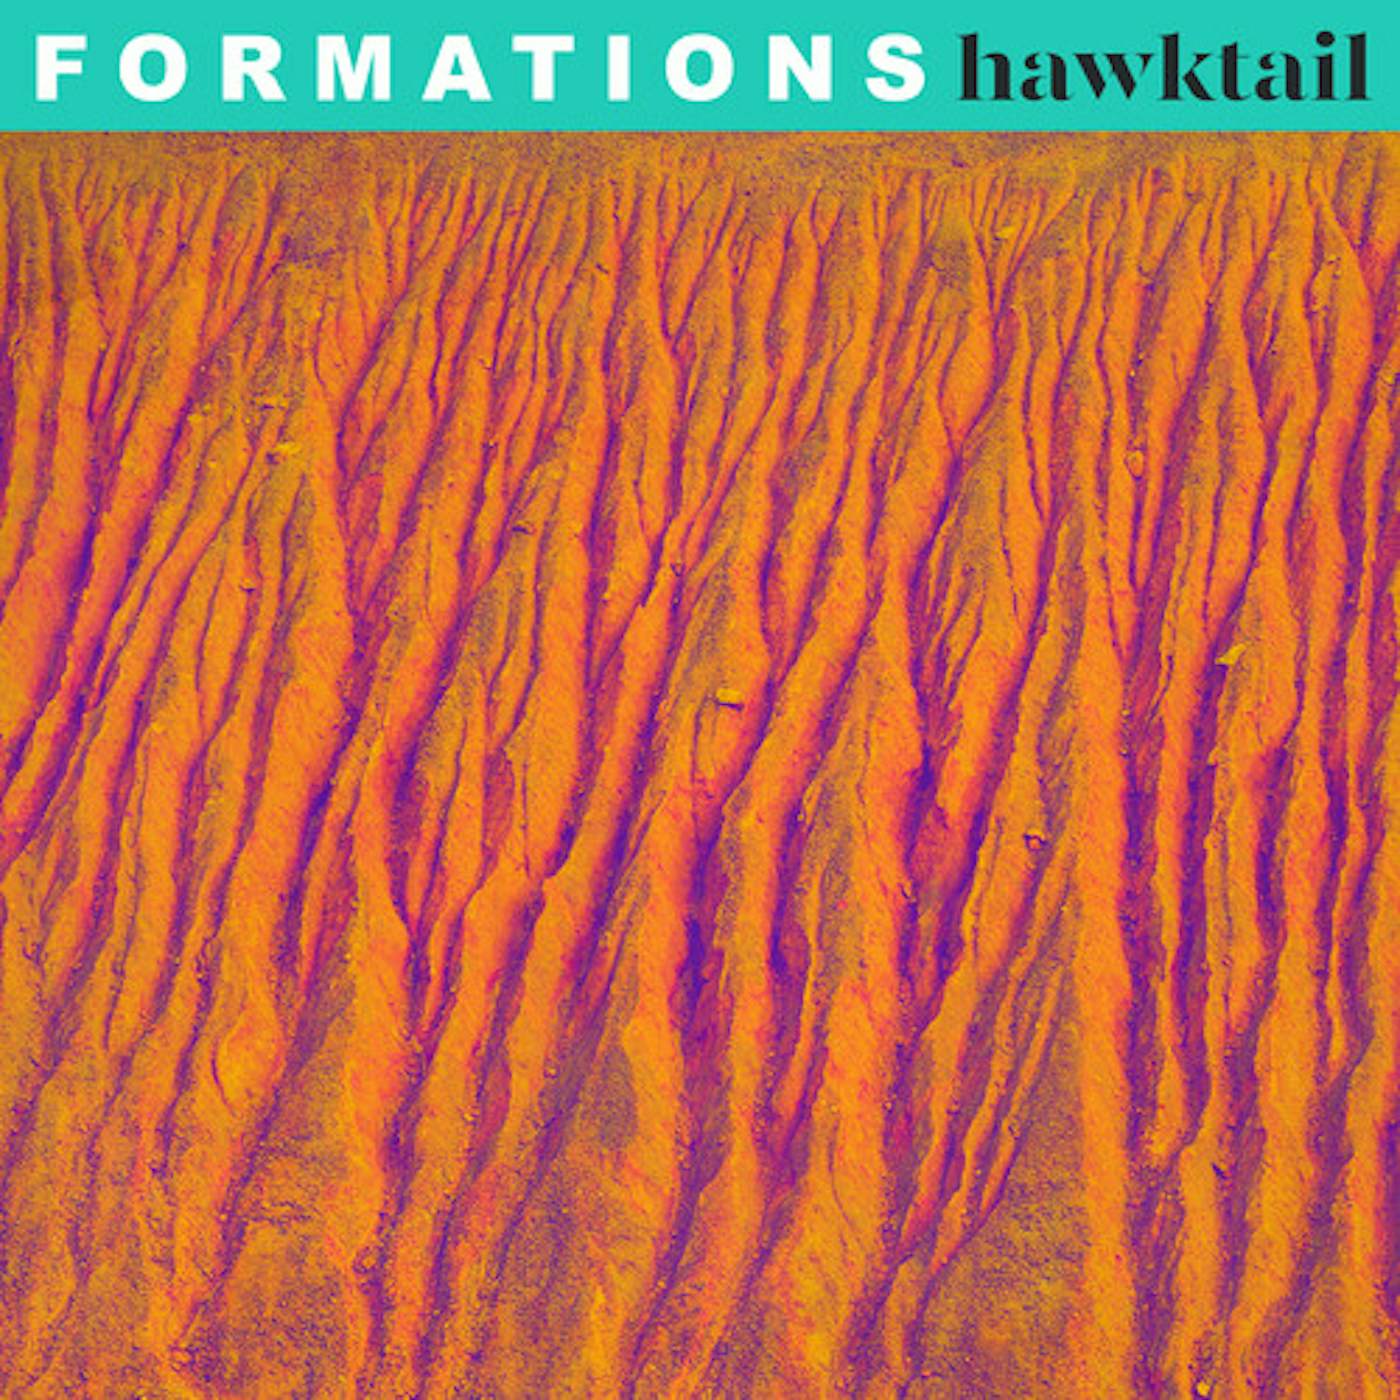 Hawktail Formations Vinyl Record